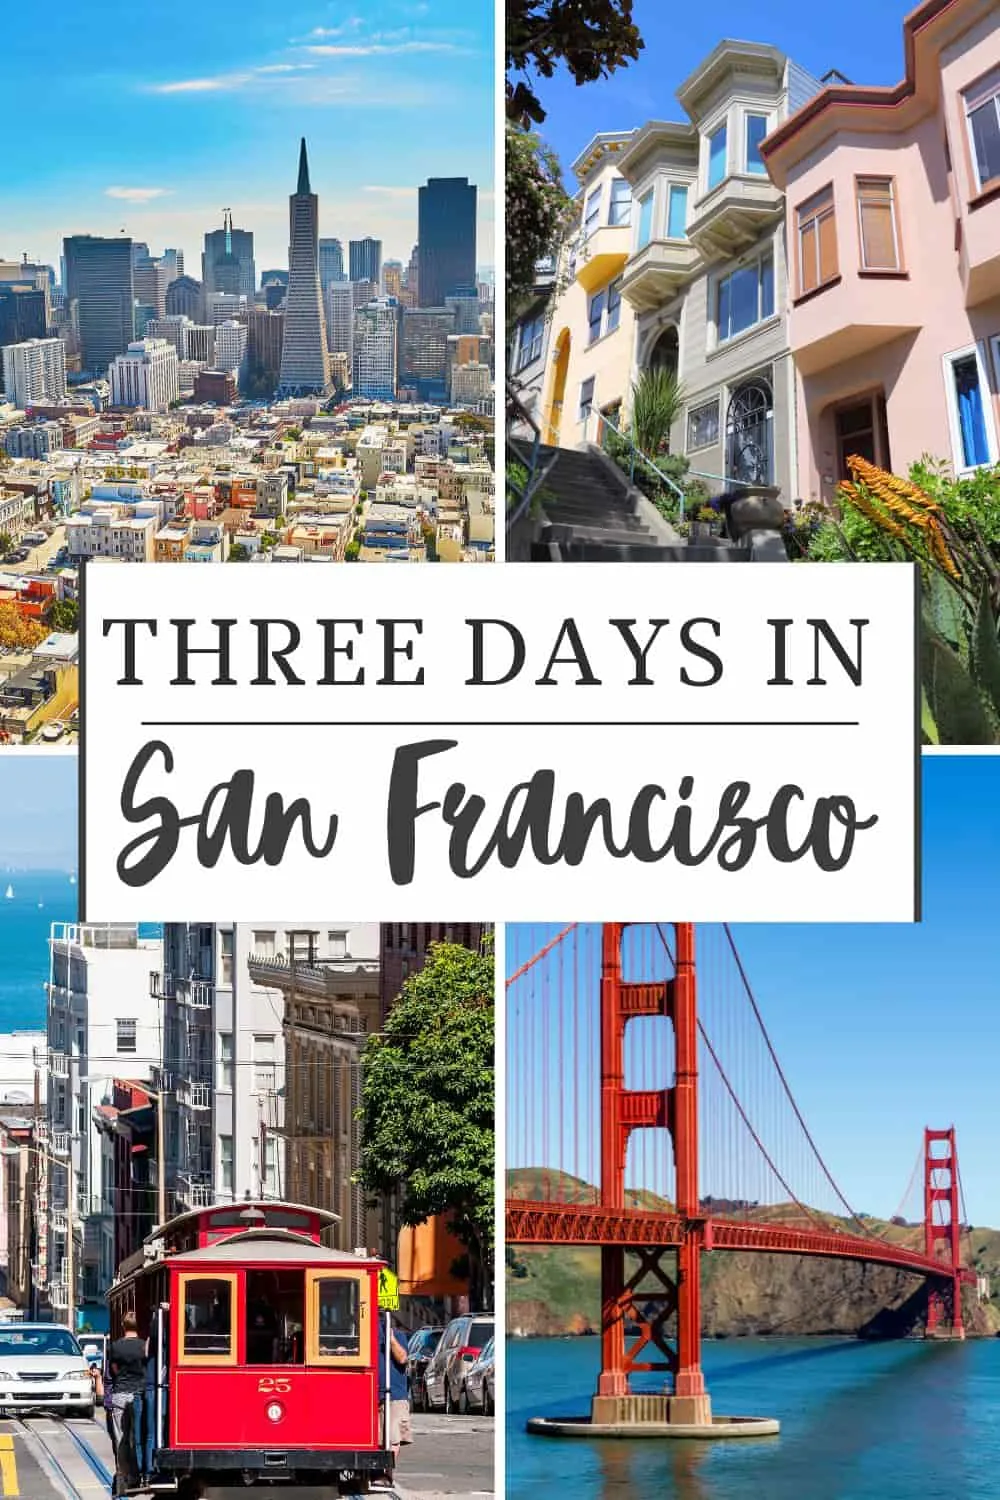 3 Days in San Francisco